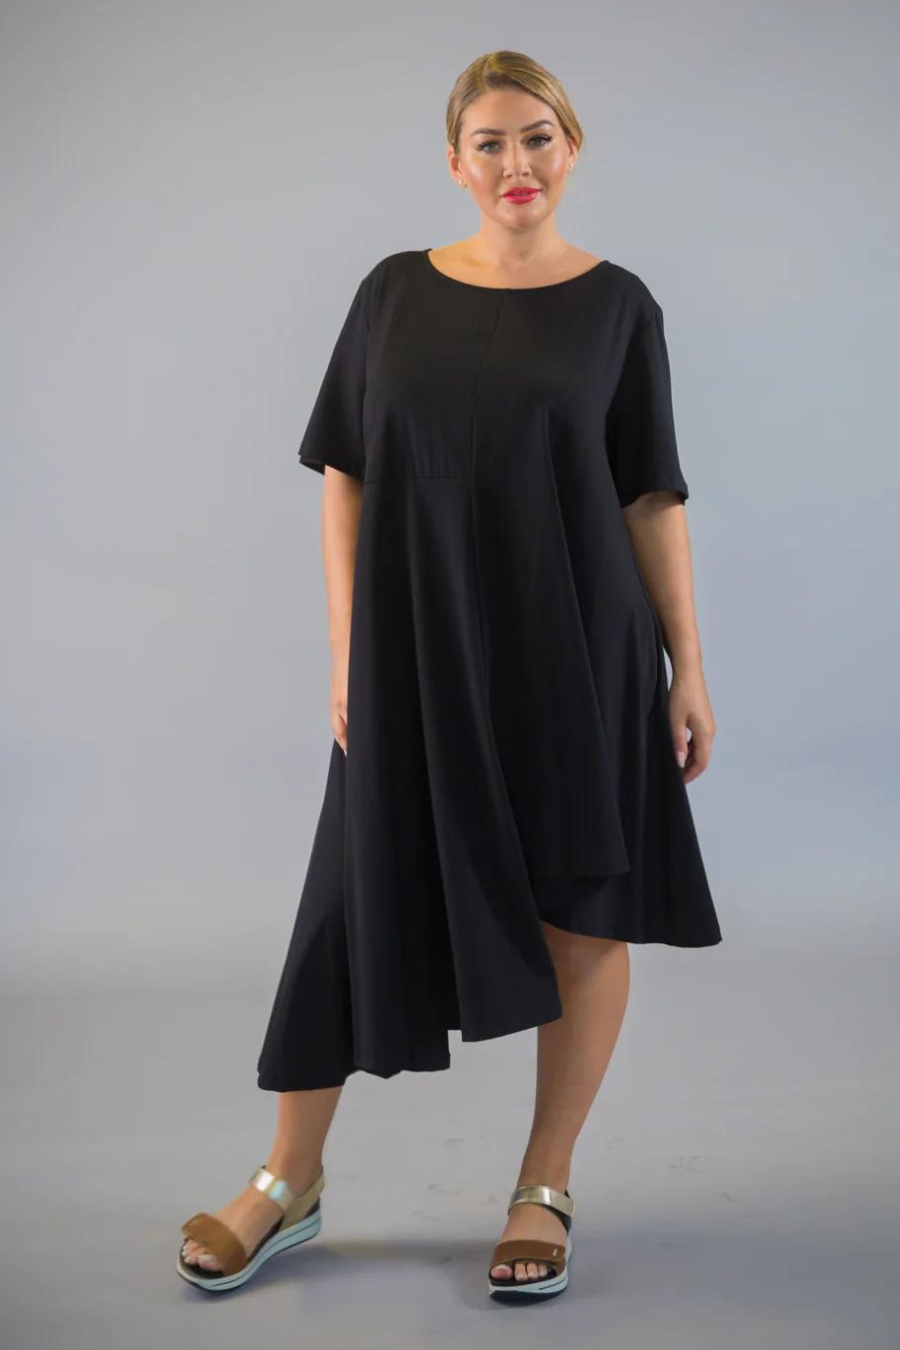 Asymmetric Black Jersey Dress/Tunic